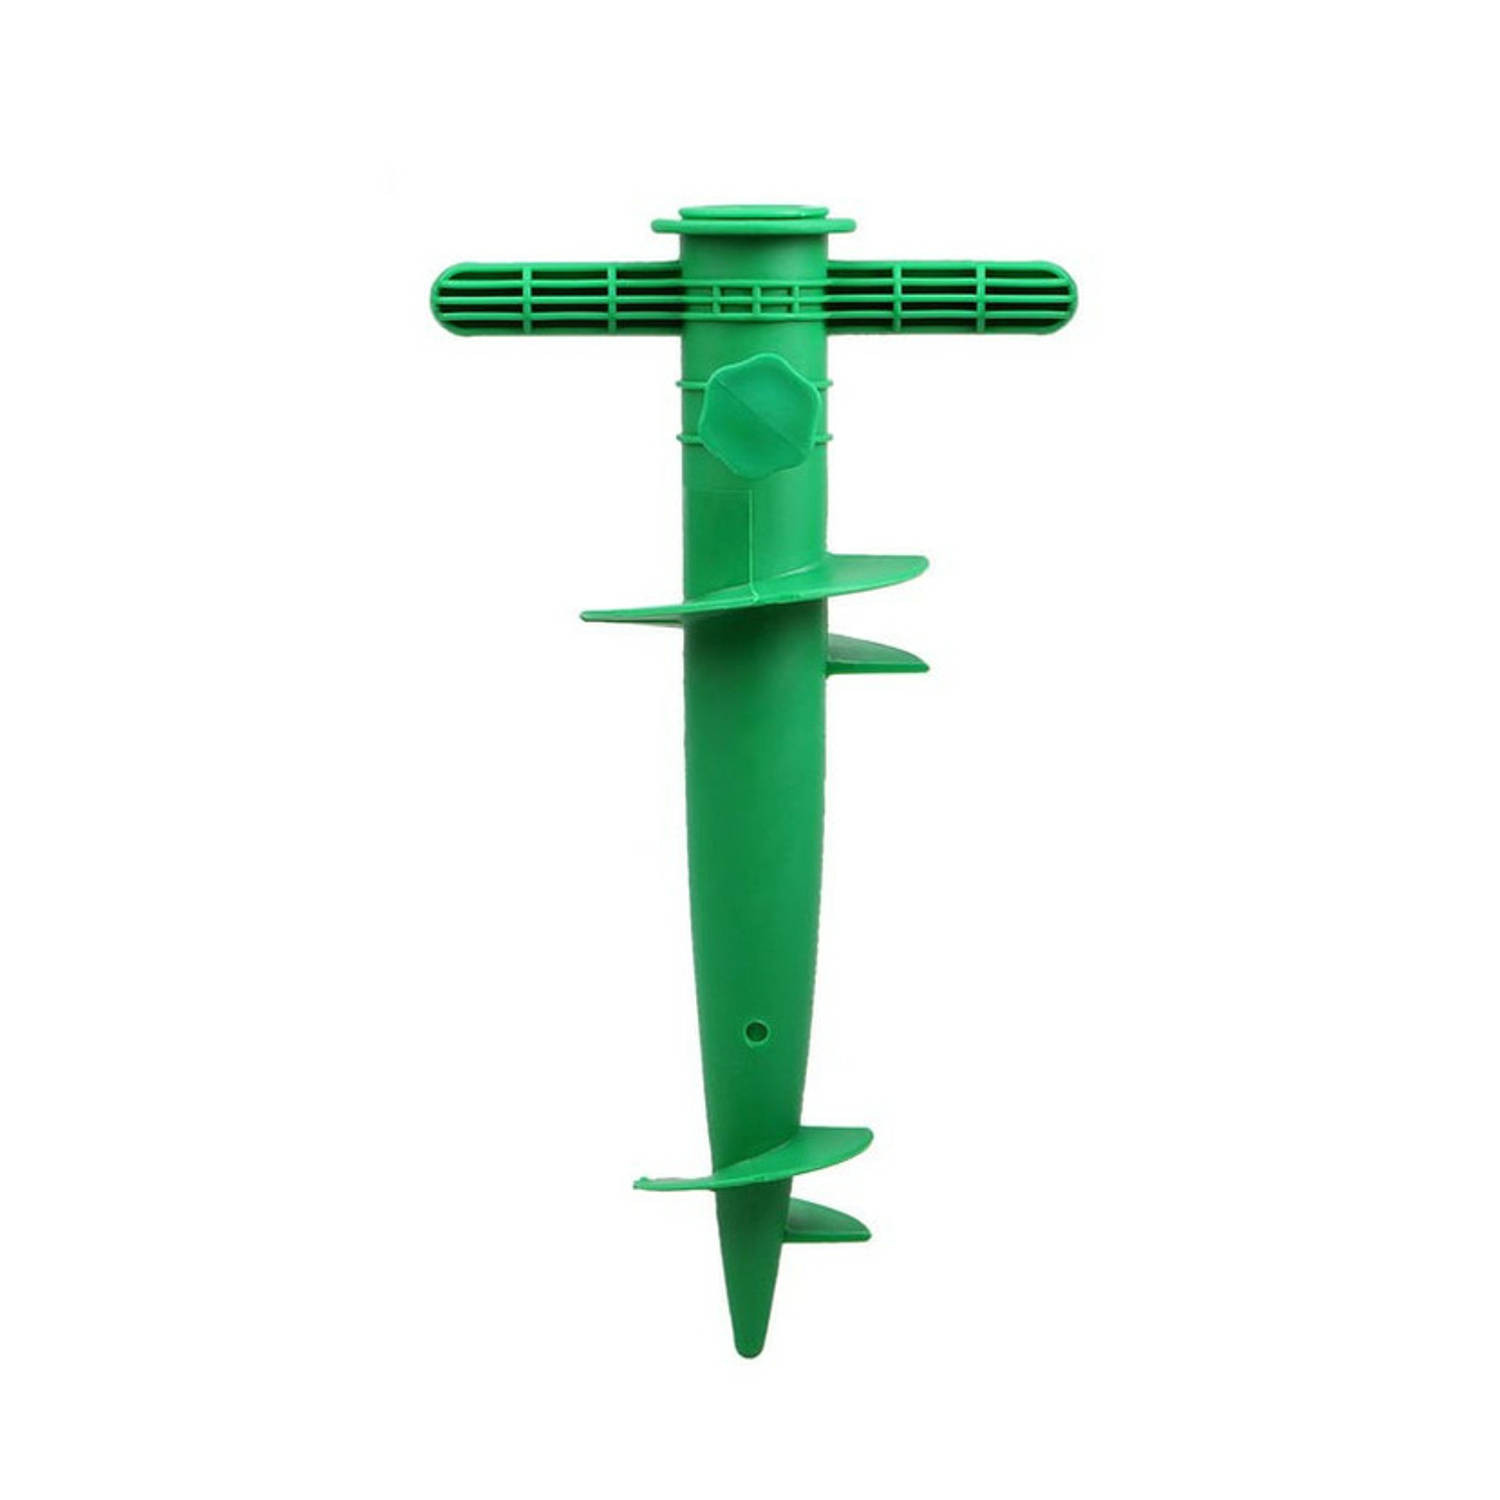 Parasolharing - groen - kunststof - D22-32 mm x H31 cm - Parasolvoeten